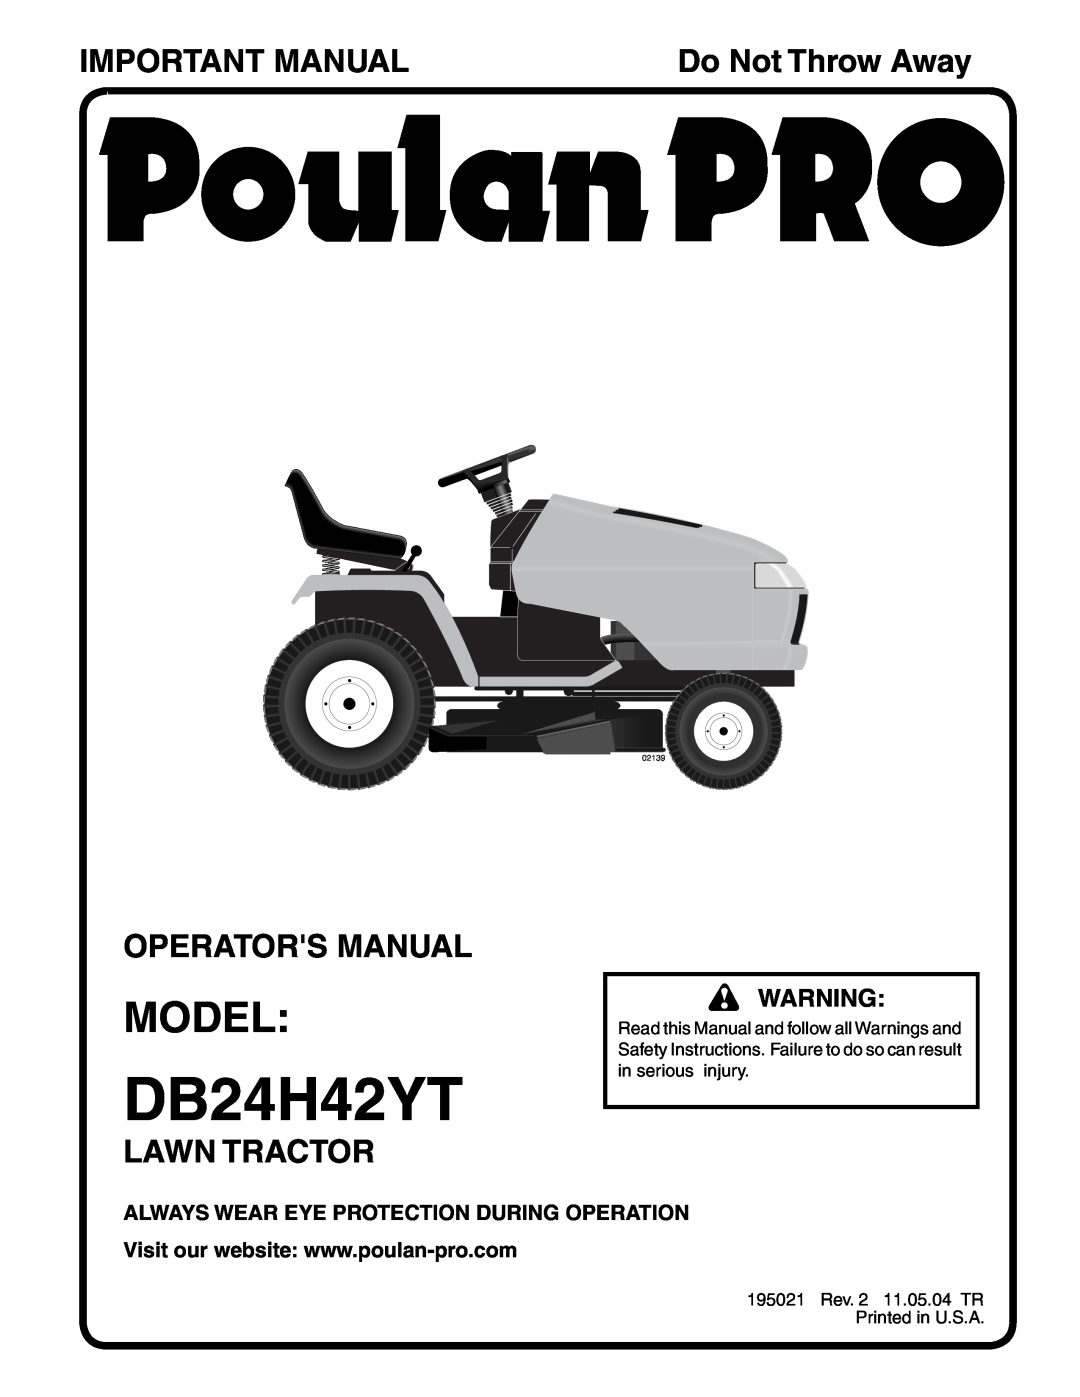 Poulan DB24H42YT manual Model, Important Manual, Operators Manual, Lawn Tractor, Do Not Throw Away, 02139 